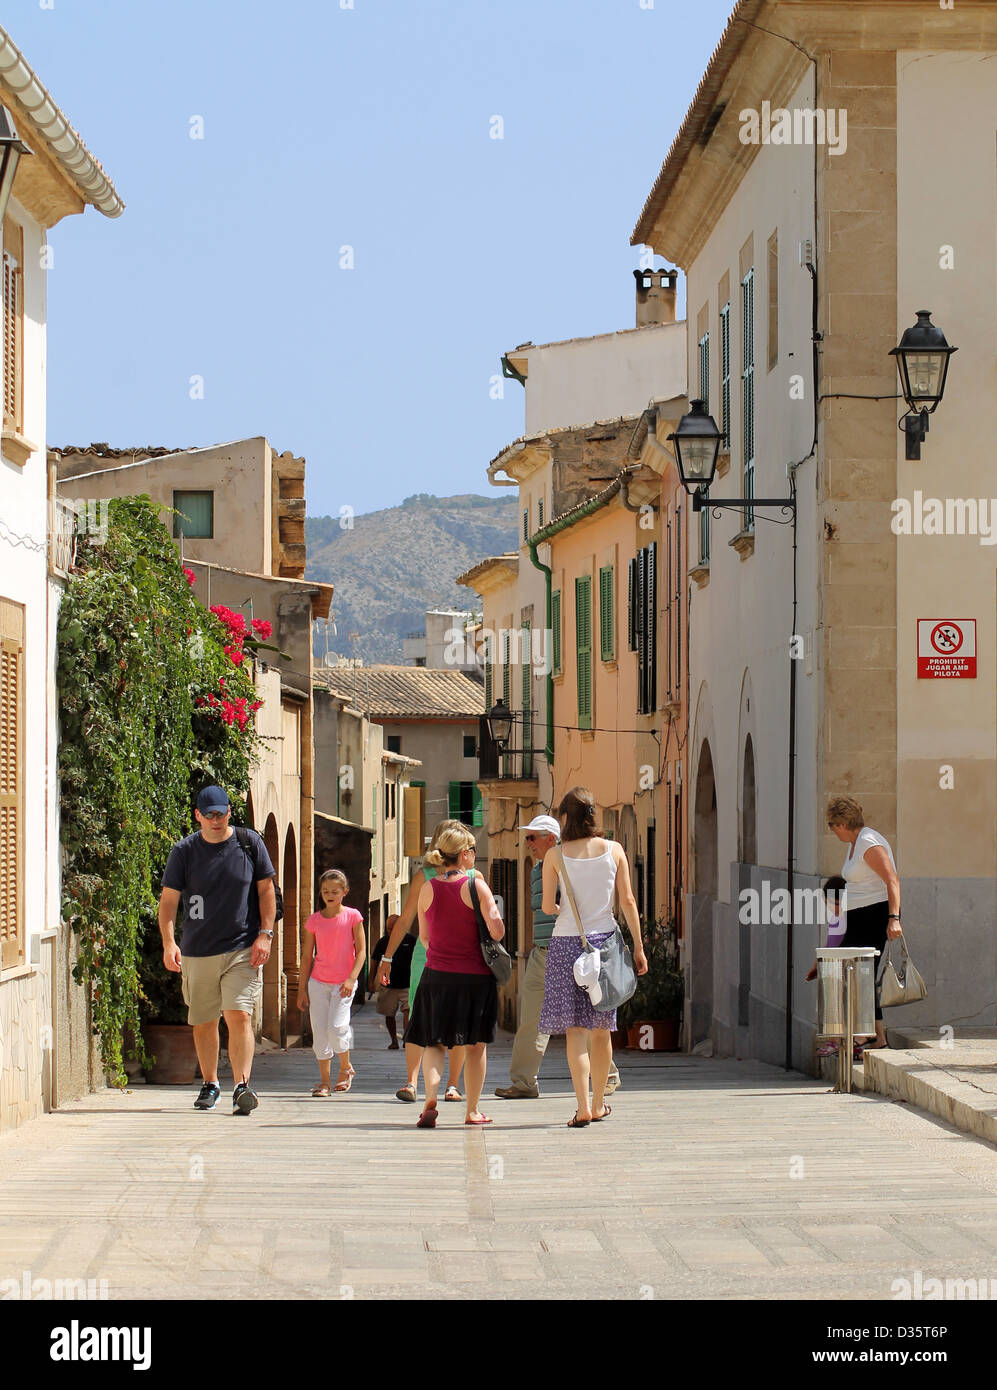 Palma City, Spain, August 23, 2012: Photograph of families walking through streets of Palma city, Mallorca,Spain. Stock Photo